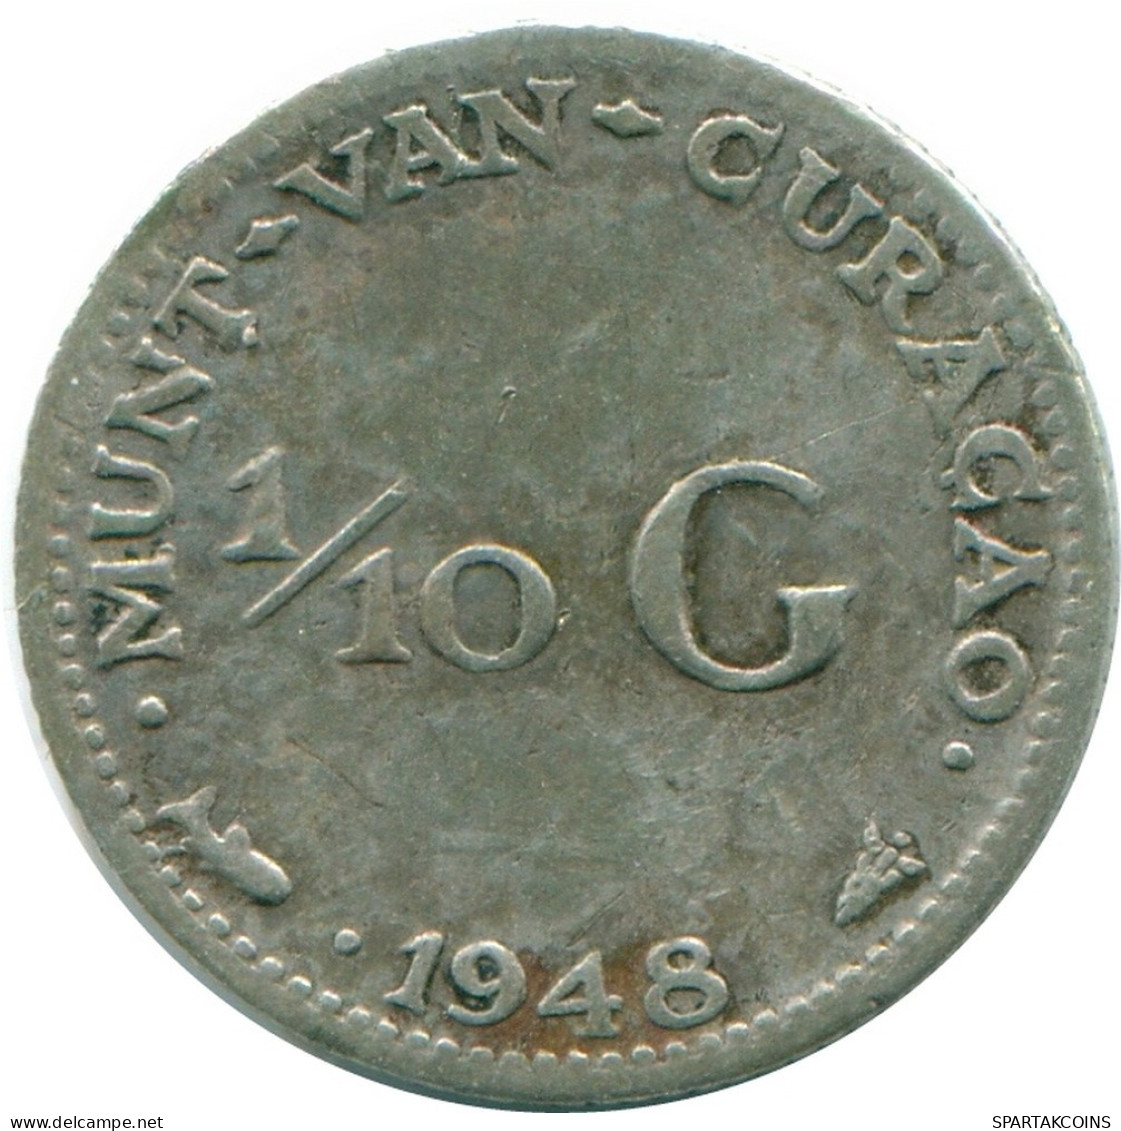 1/10 GULDEN 1948 CURACAO Netherlands SILVER Colonial Coin #NL11904.3.U.A - Curacao